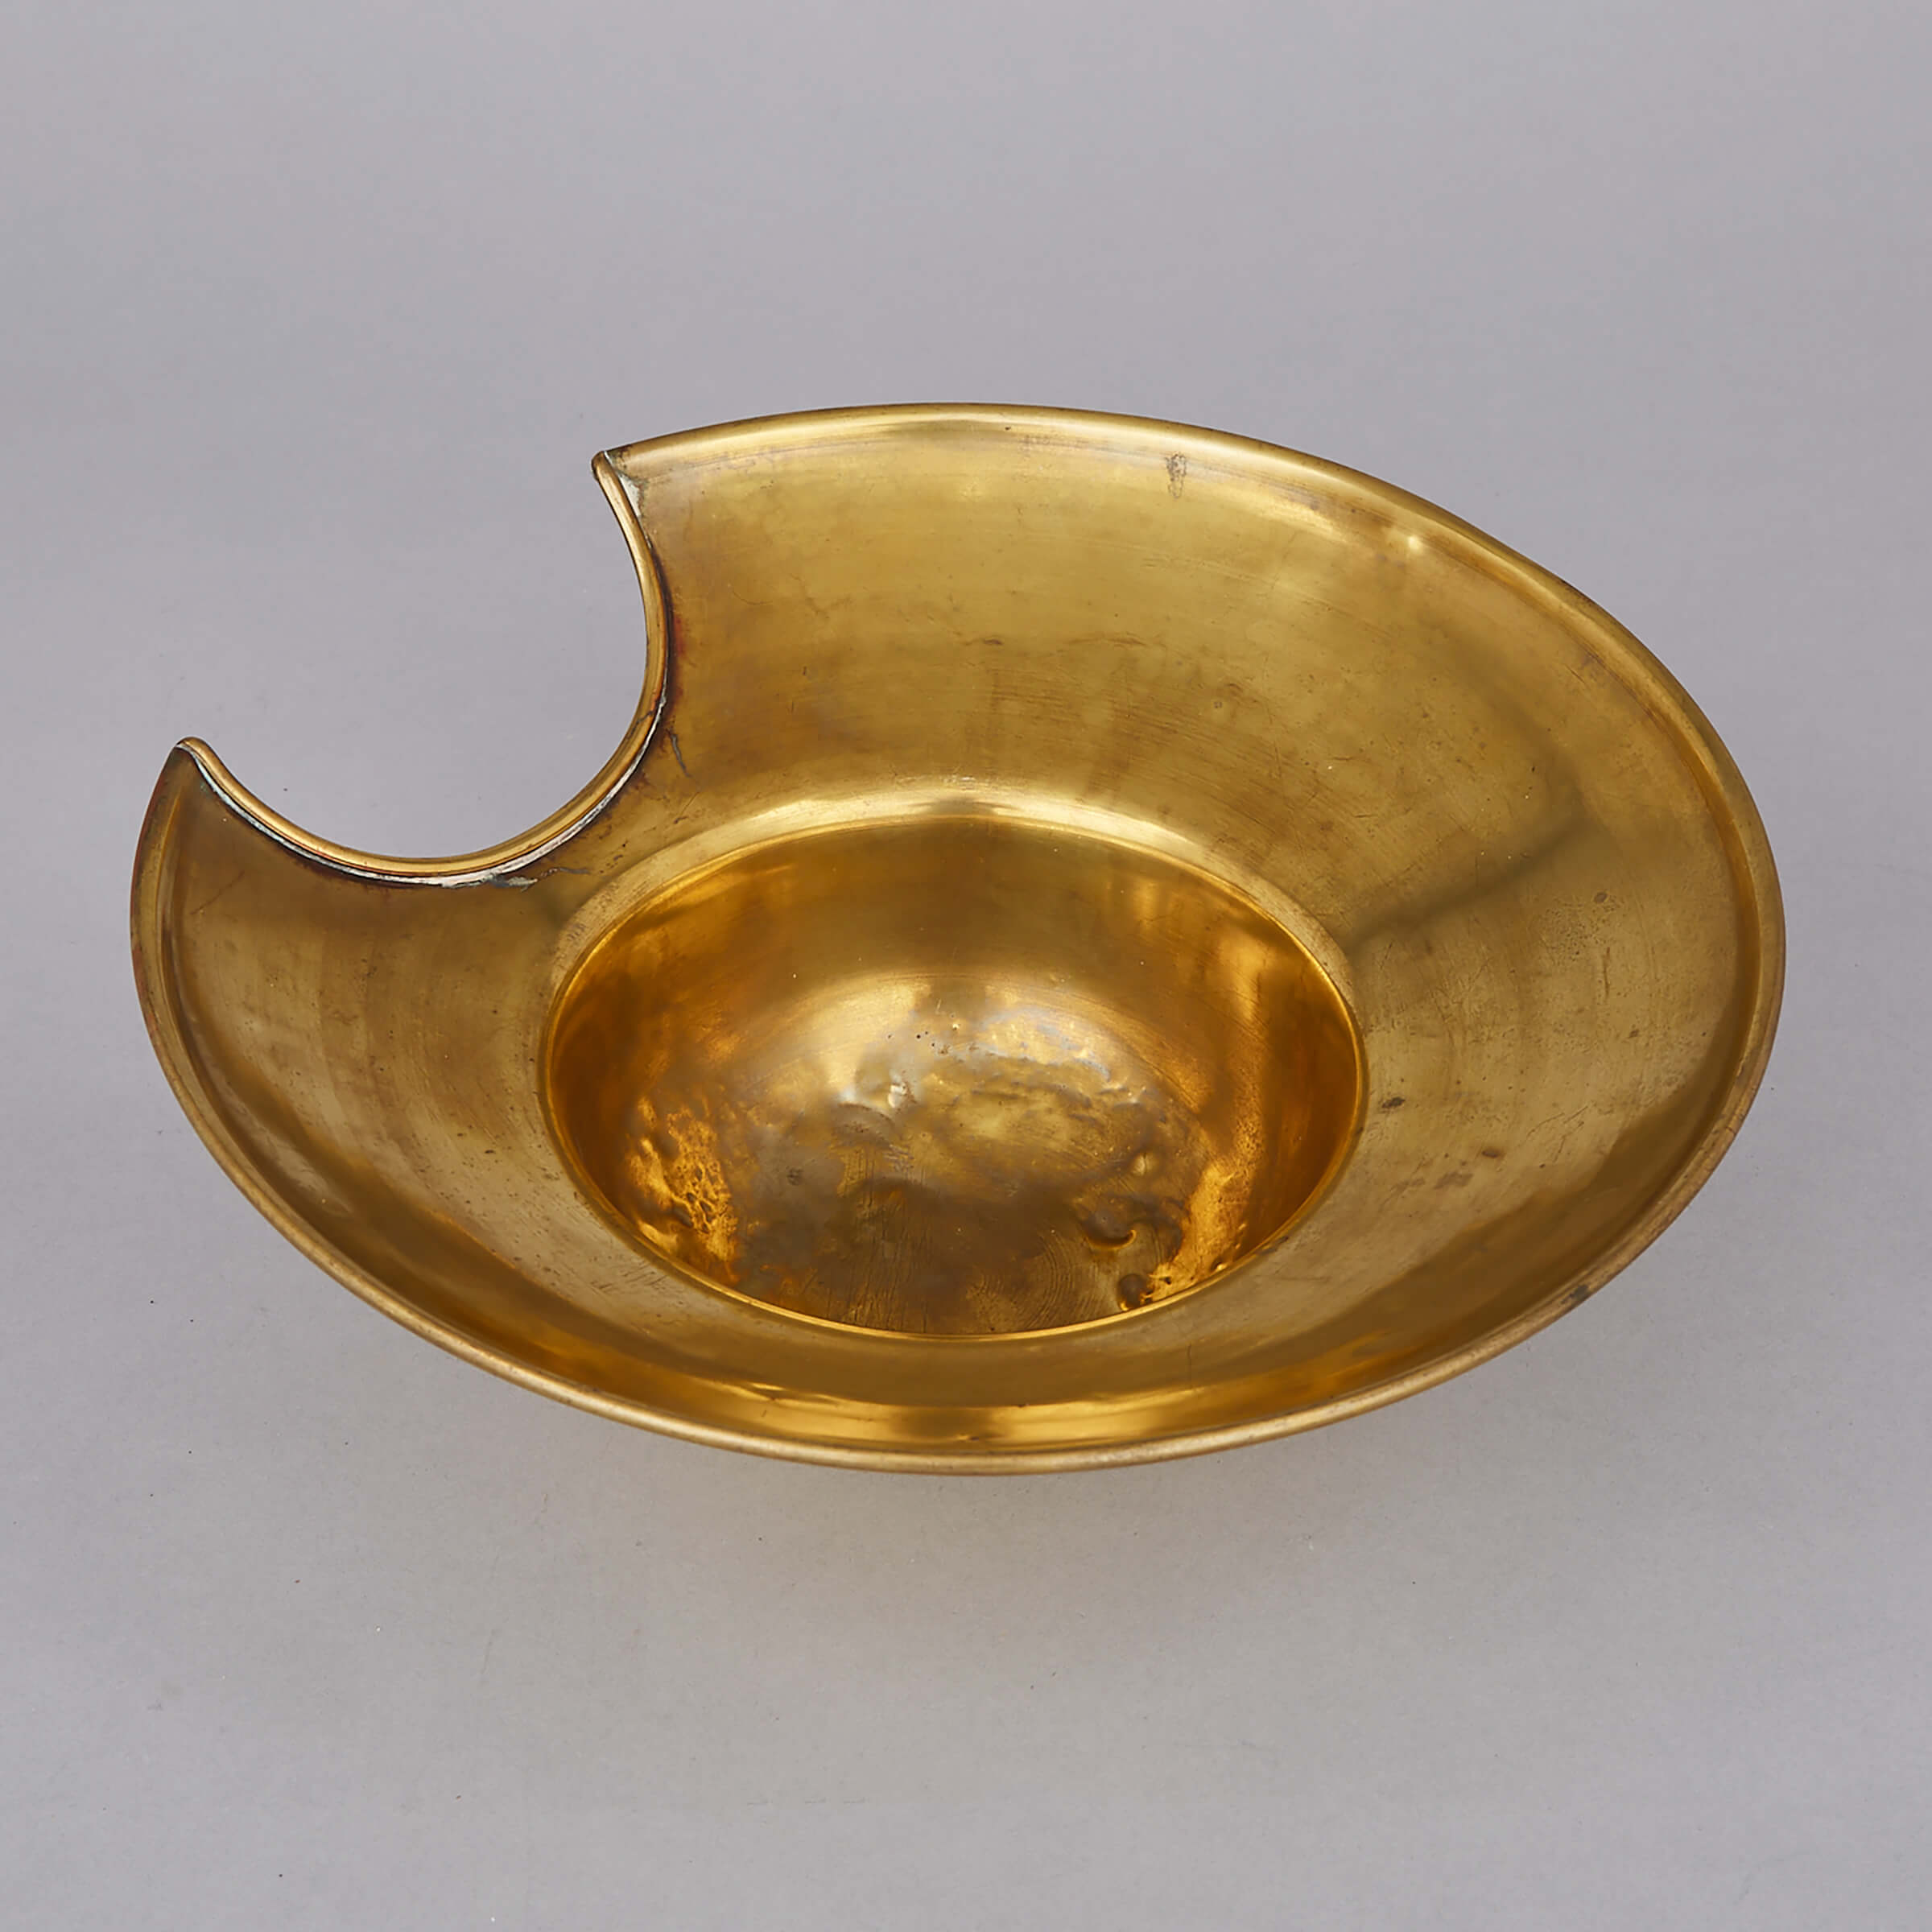 English Brass Barber’s Bowl, 18th century